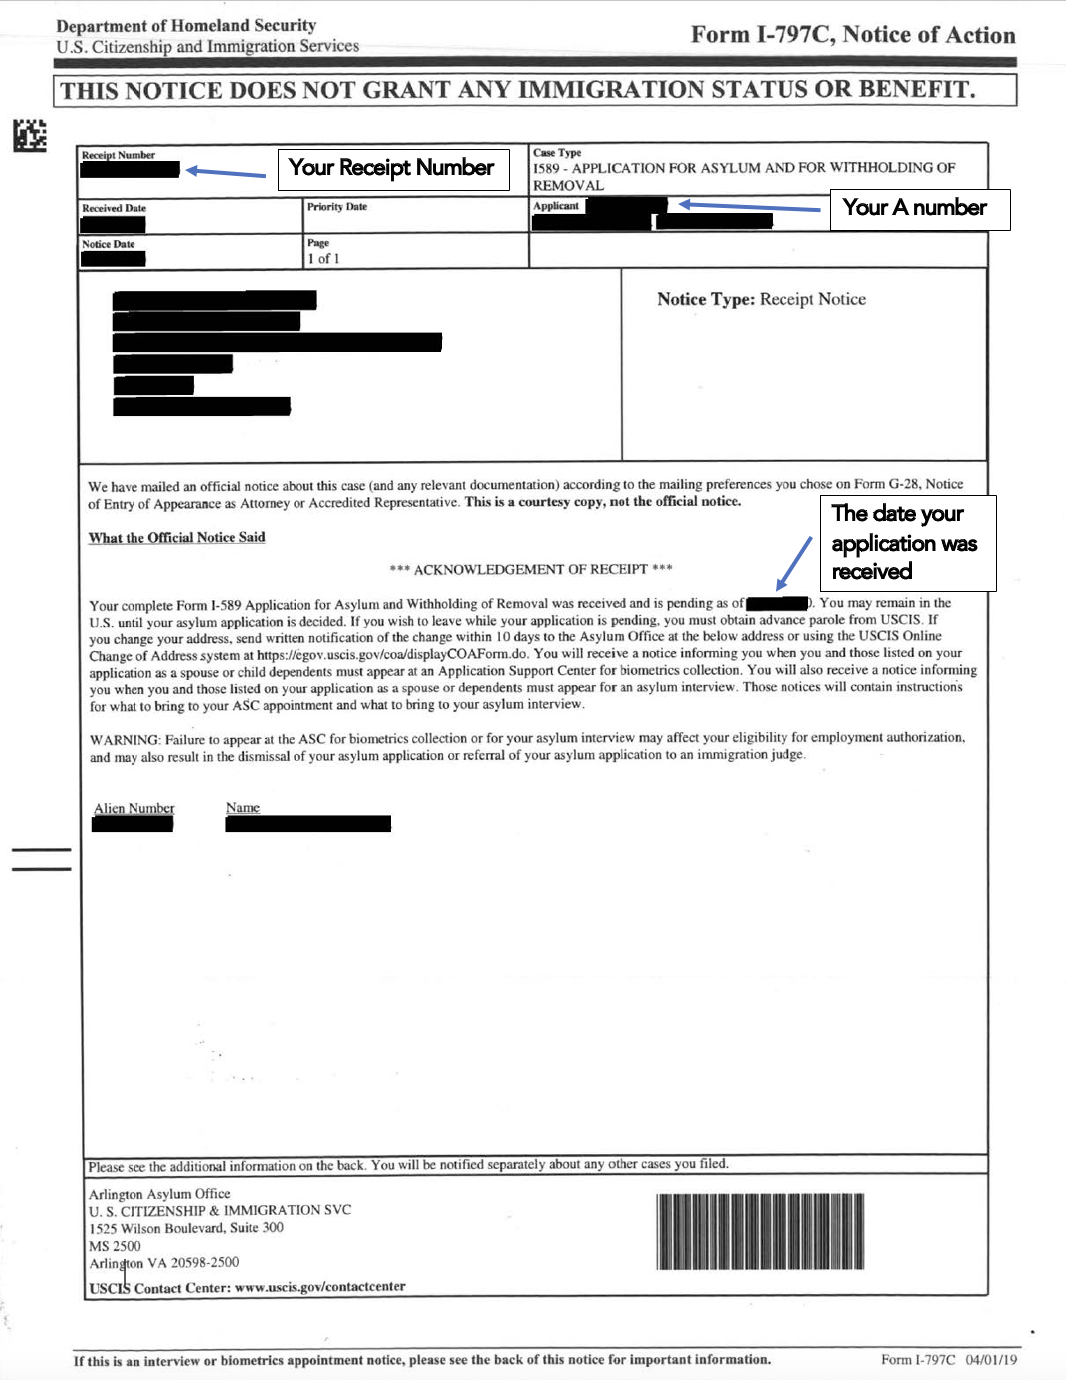 uscis-asylum-application-receipt-notice-resources-for-asylum-seekers